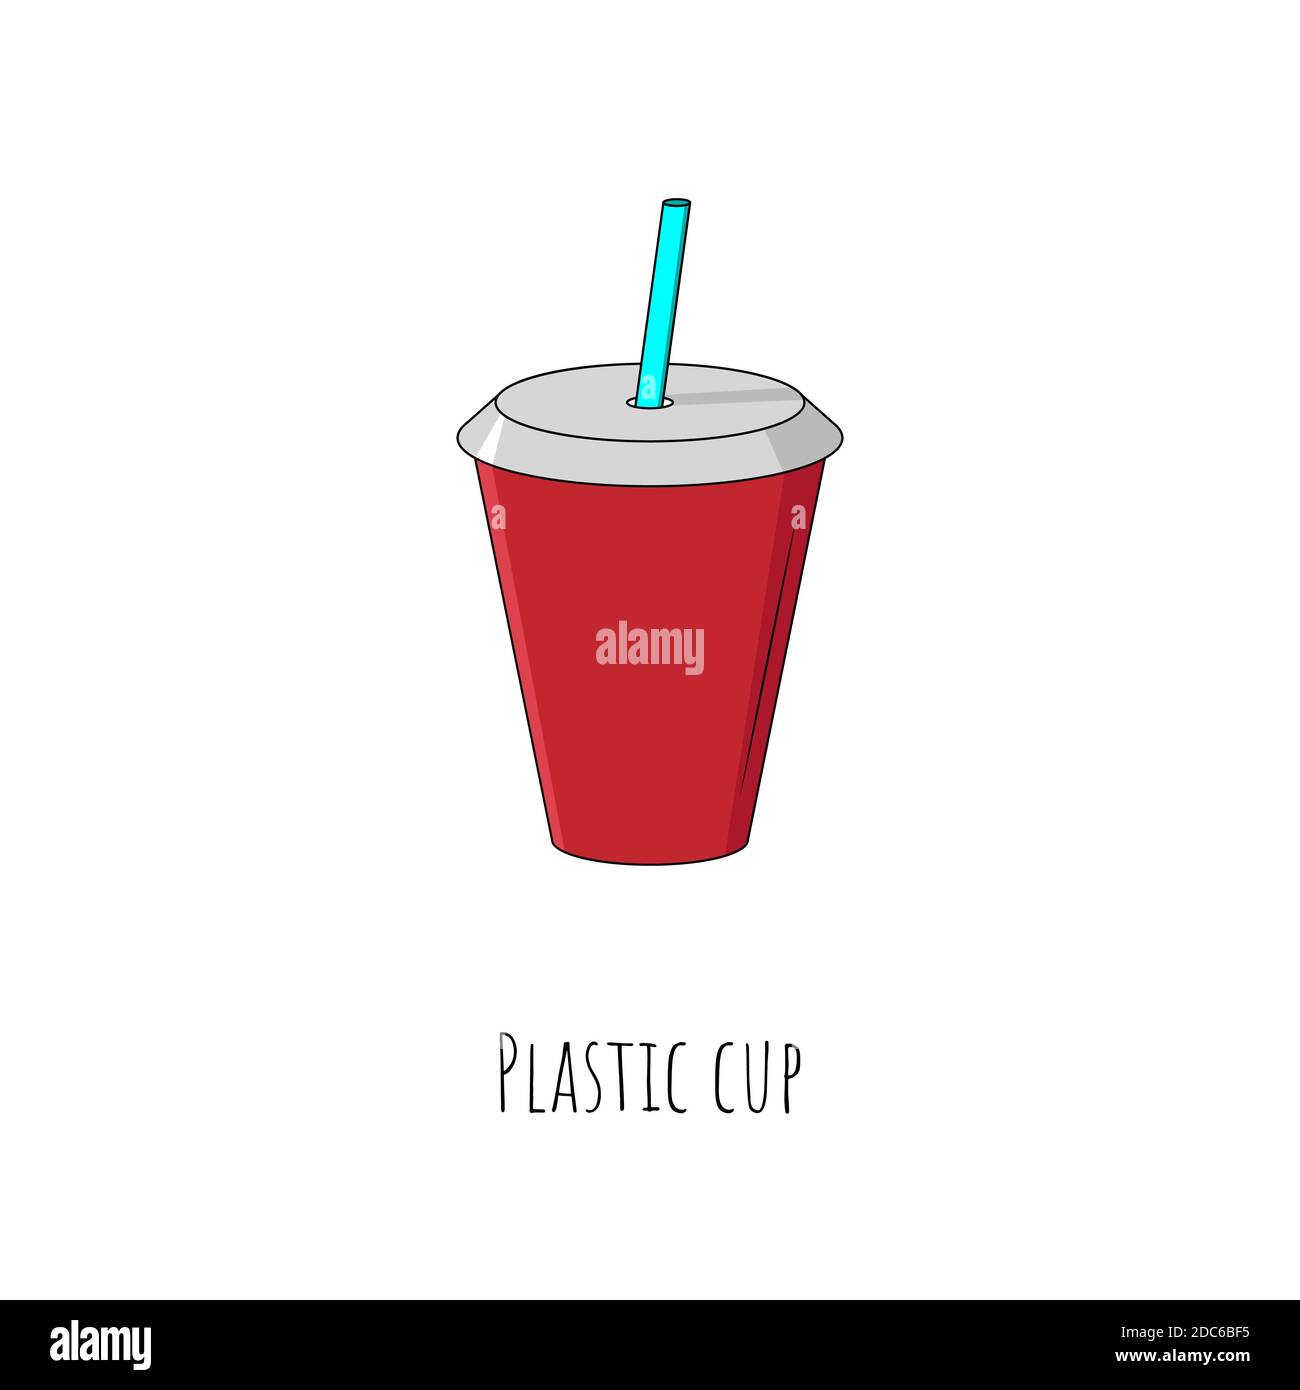 Cartoon Plastic Cup of Soda Drink with Straw, Vectors